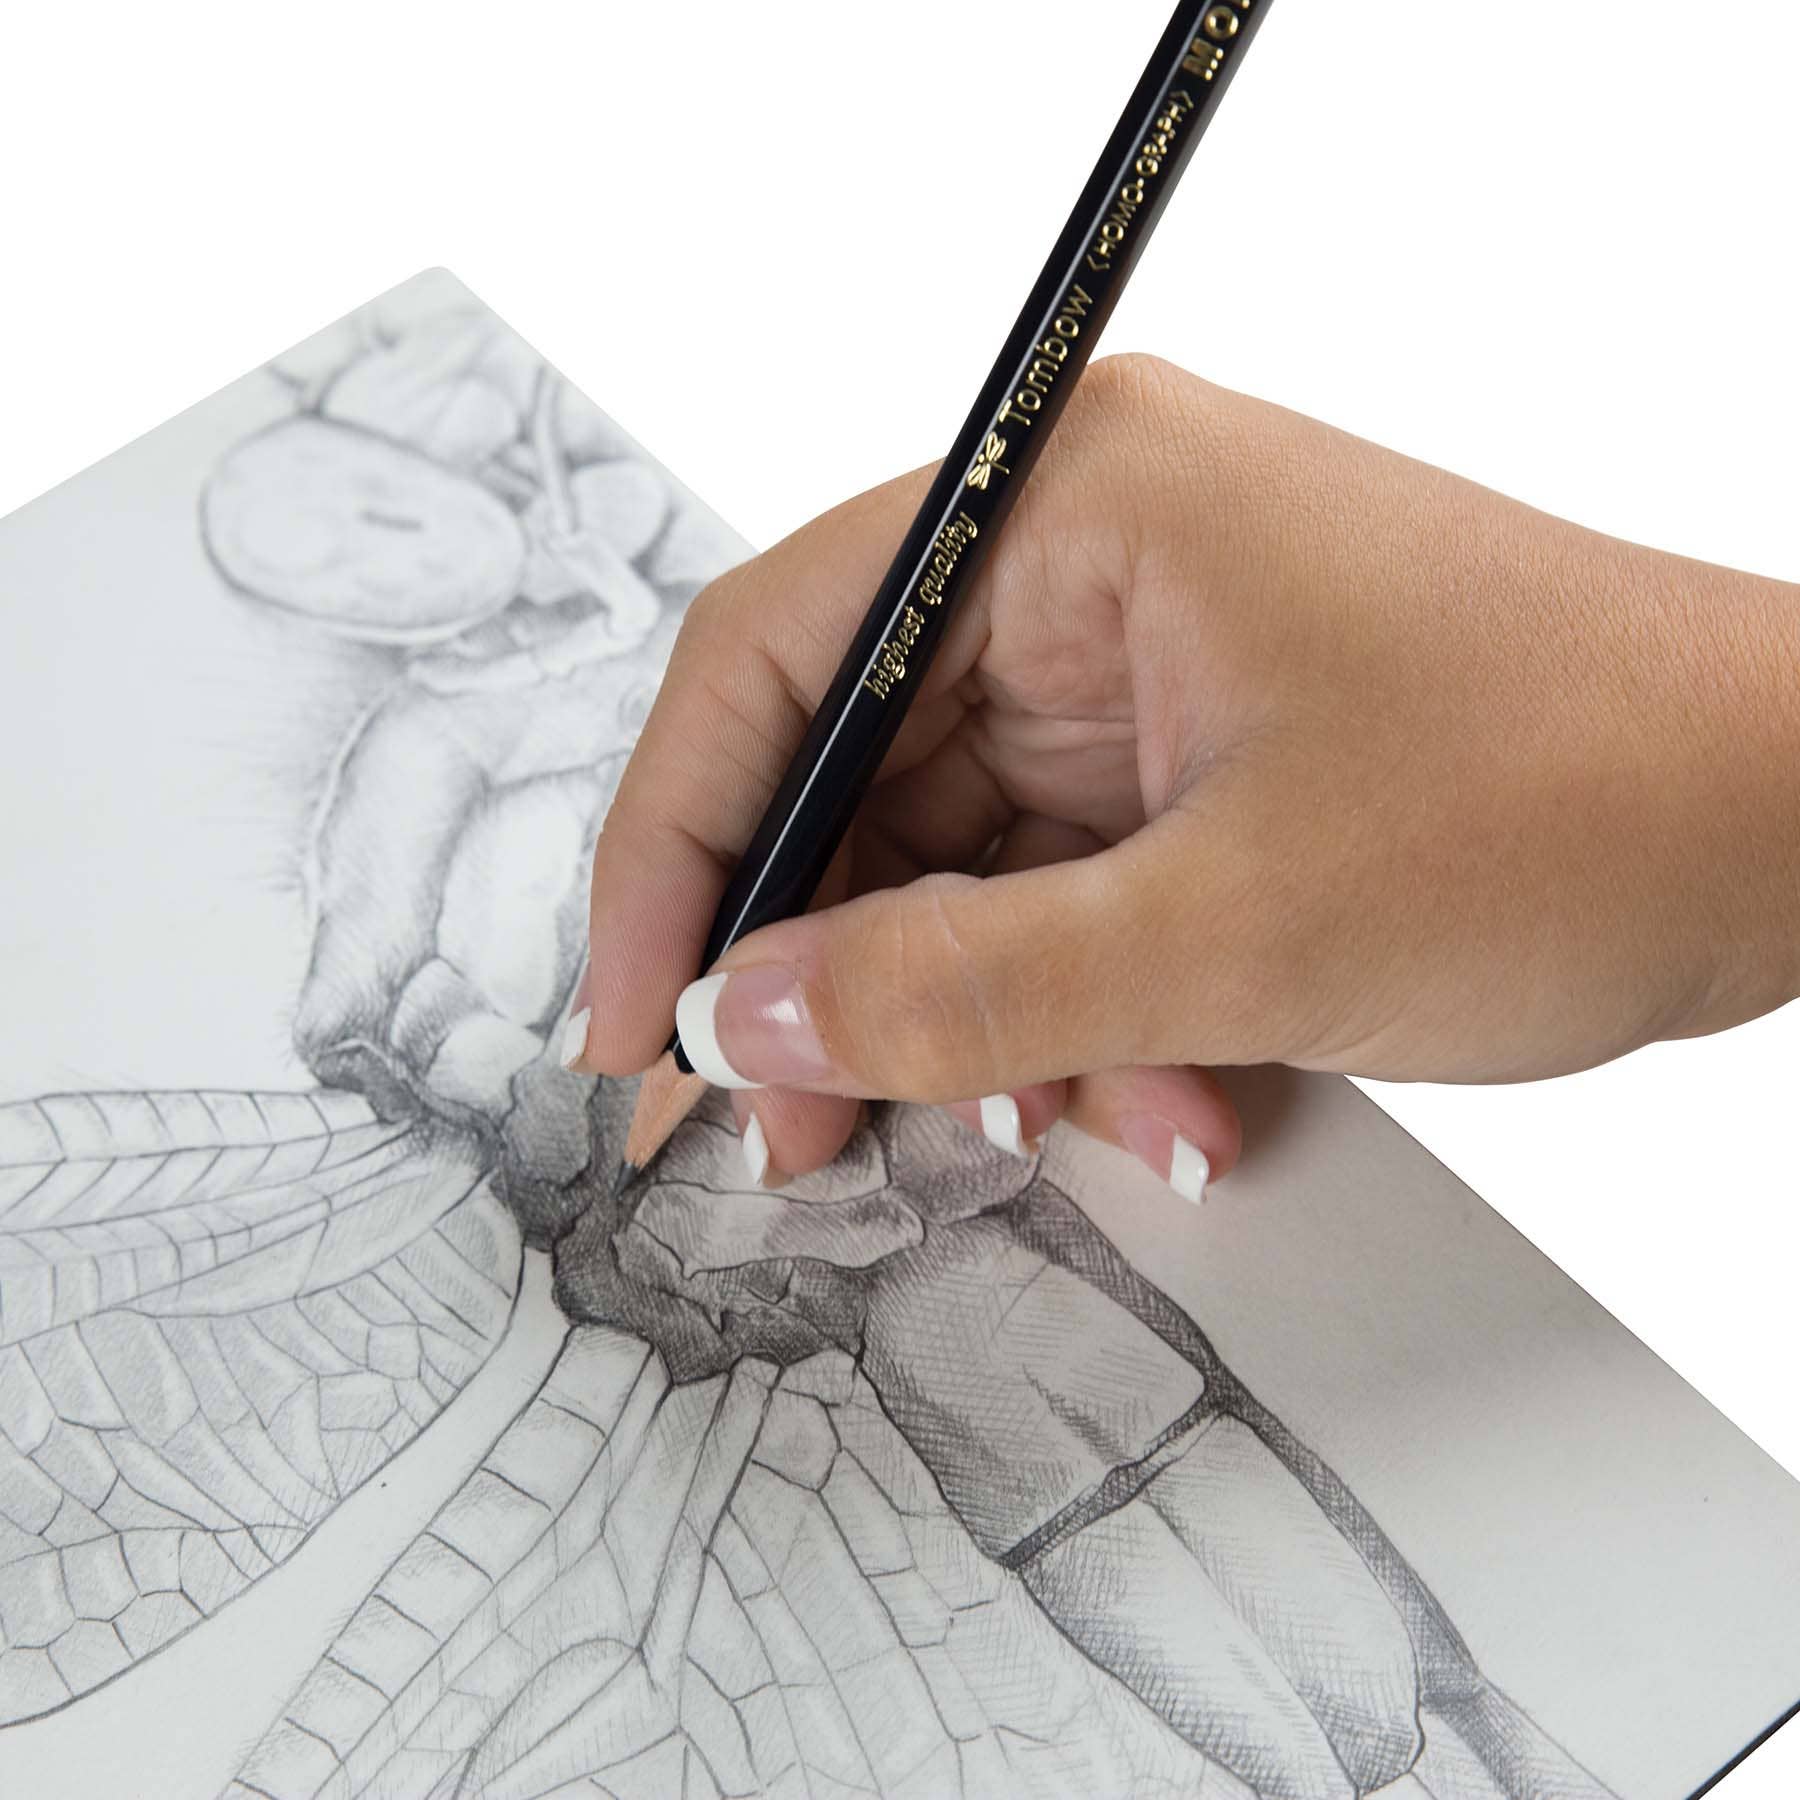 MONO Professional Drawing Pen Set, 3-Pack